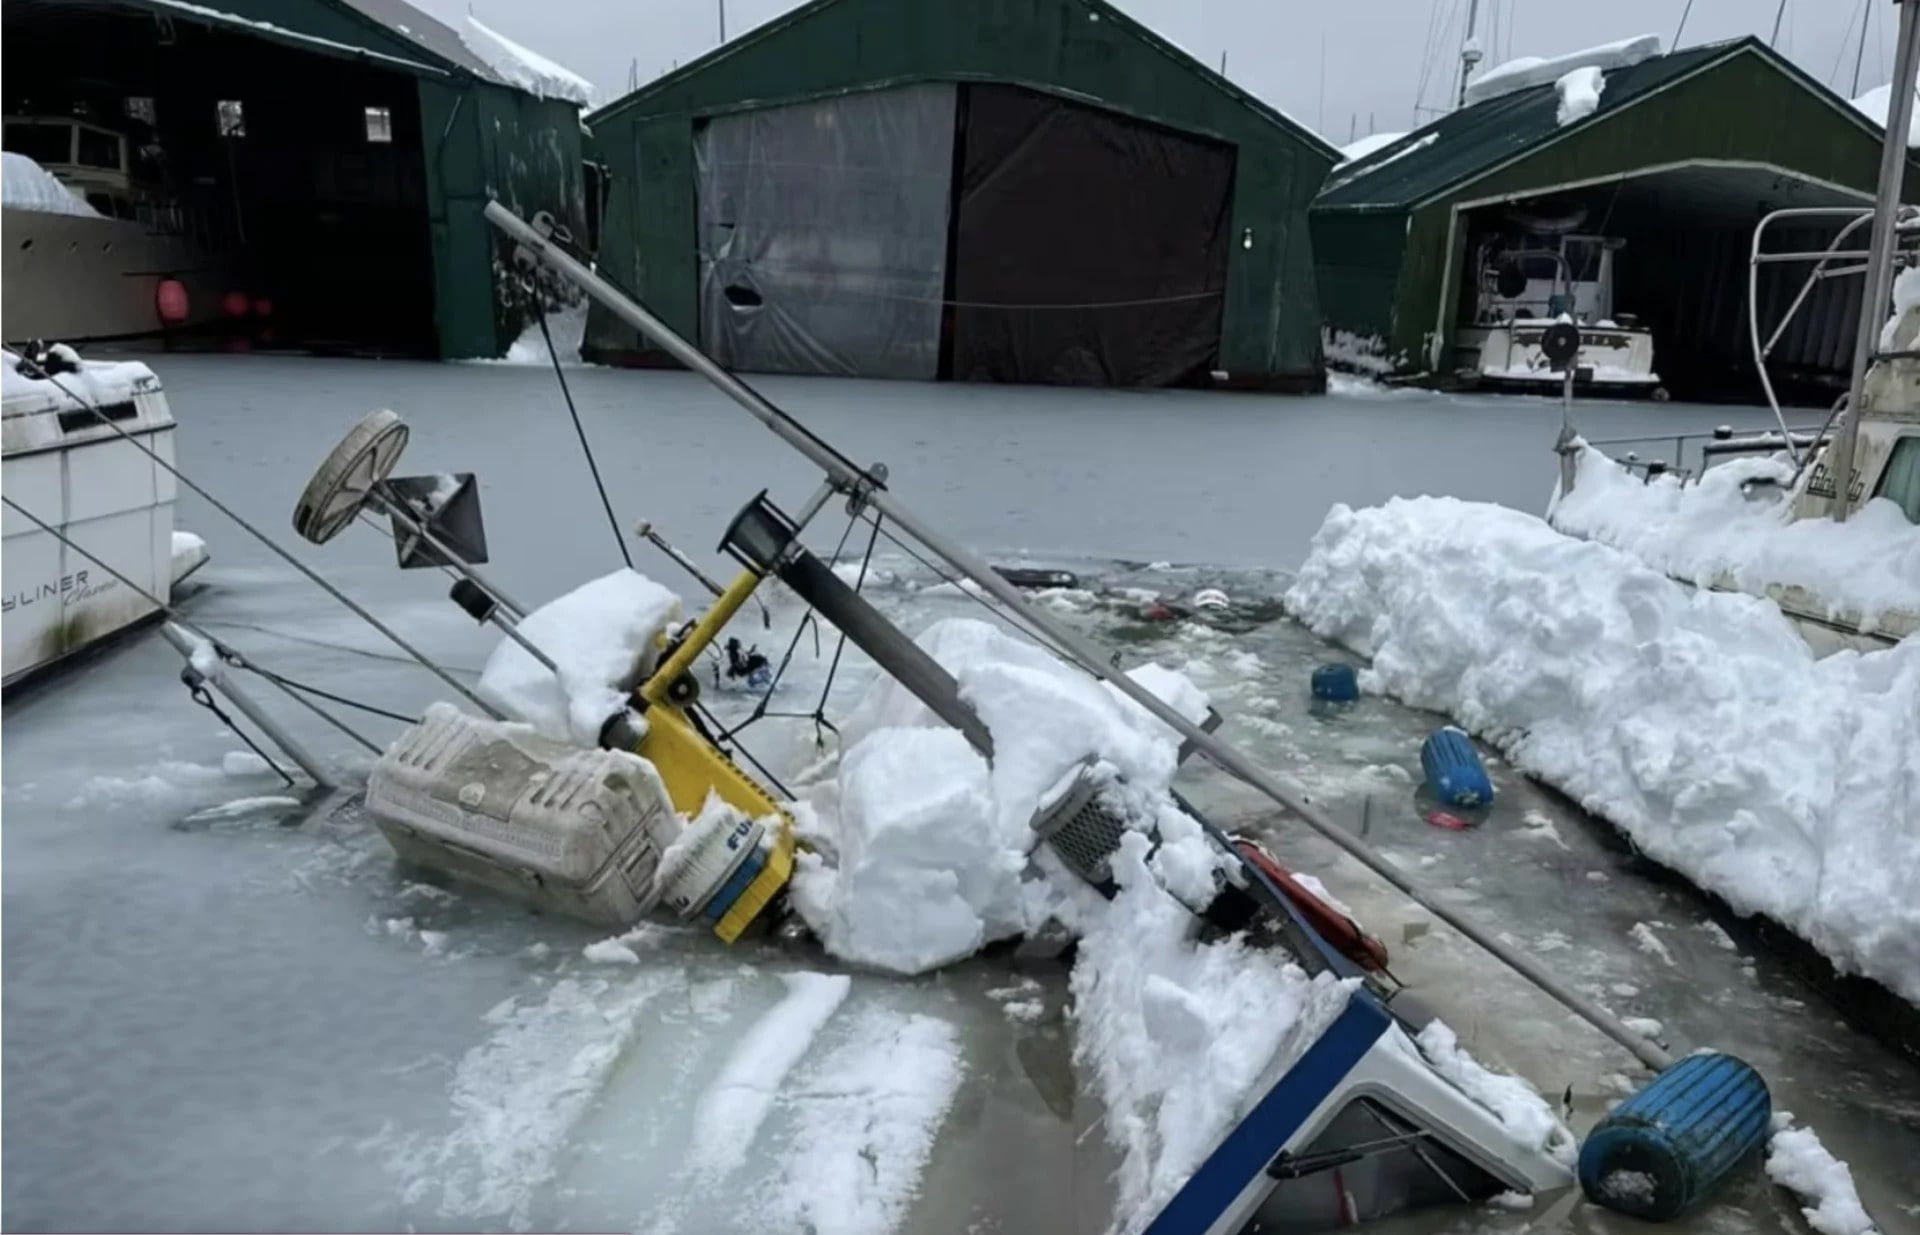 Sunken boat caused by snowfall